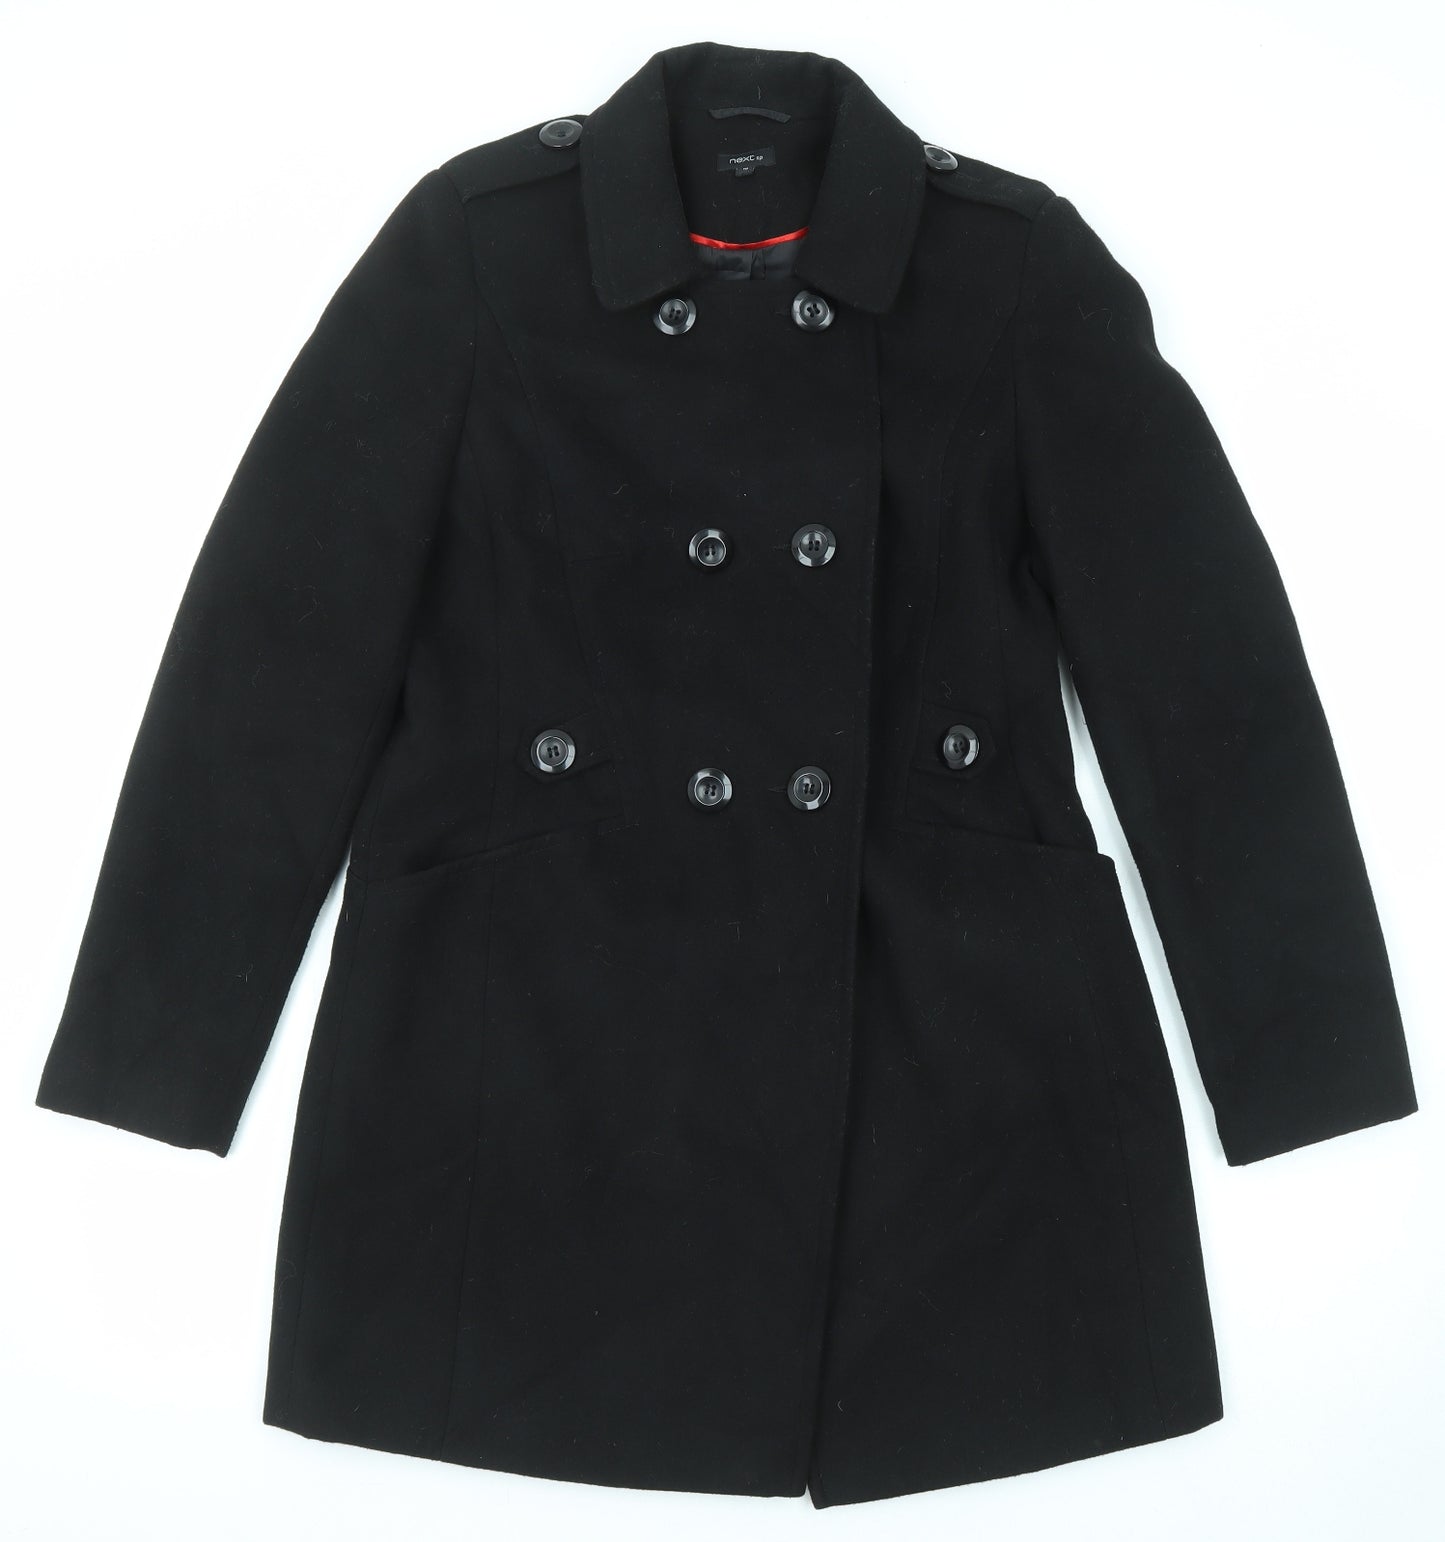 NEXT Womens Black Pea Coat Coat Size 10 Button